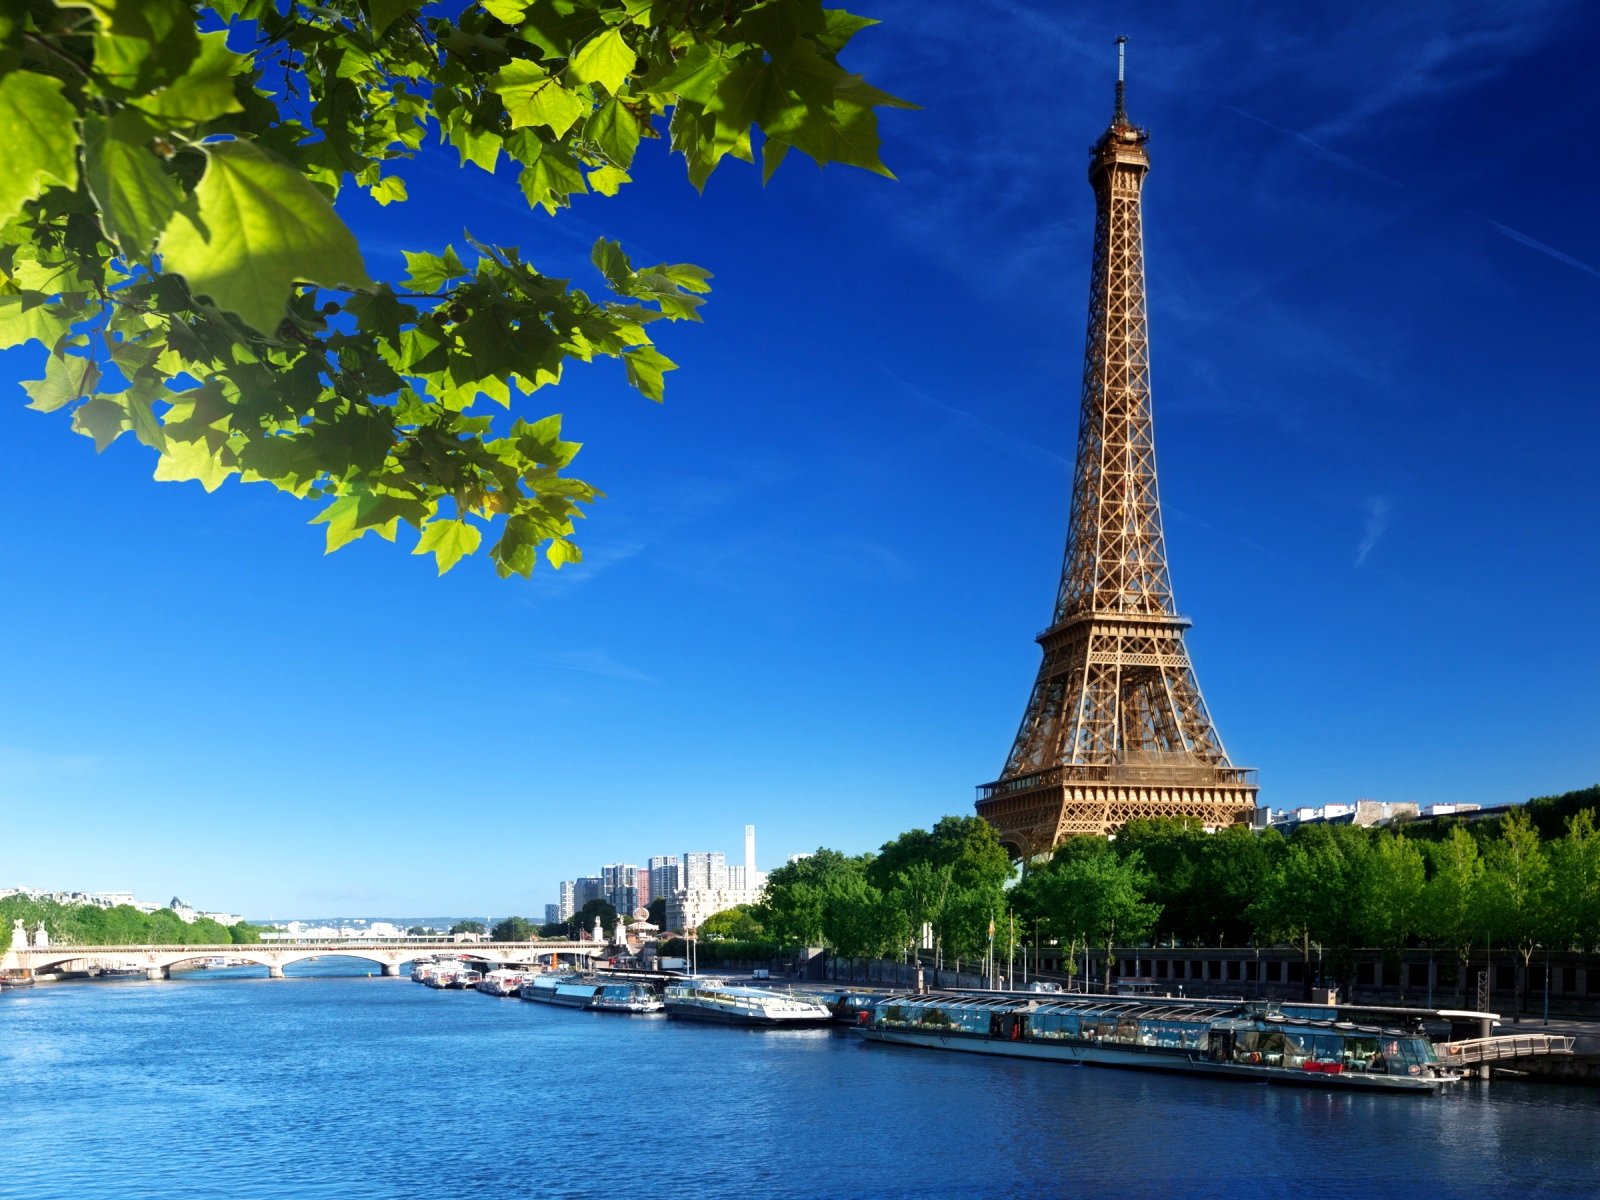 Eiffel Tower along the River Seine, Paris, France Google image from http://www.mrwallpaper.com/wallpapers/eiffel-tower-seine-river-1600x1200.jpg